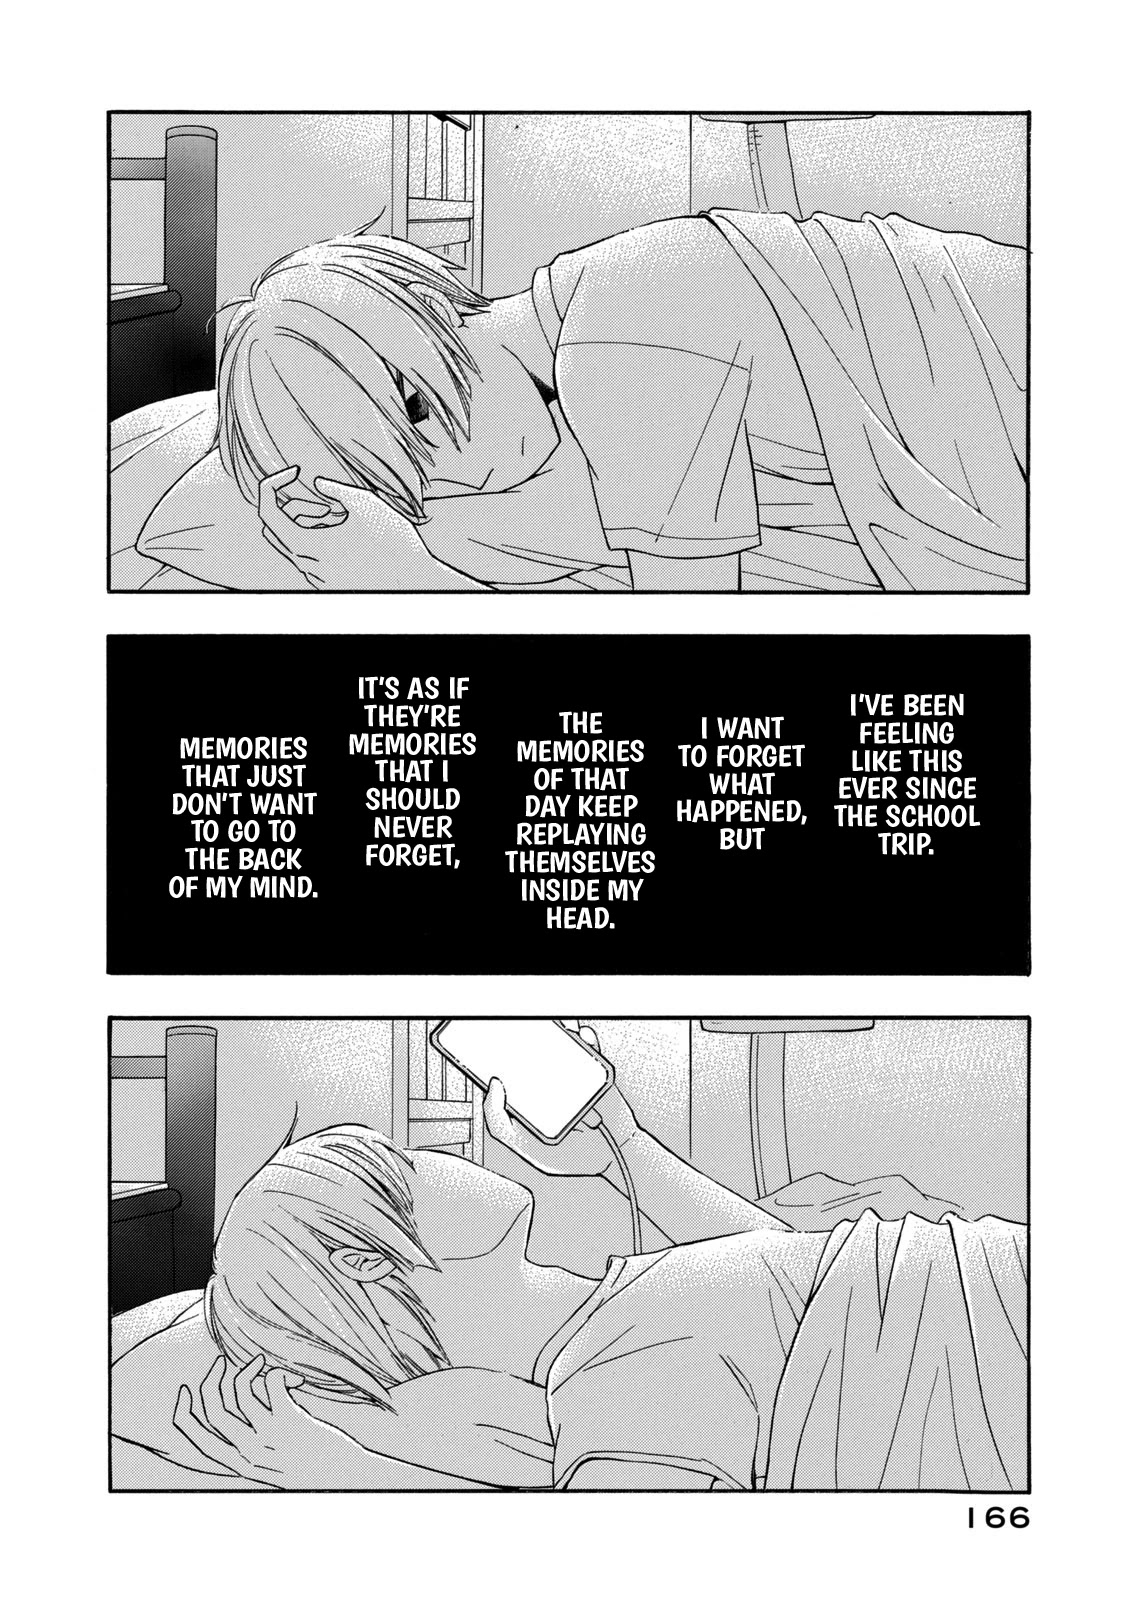 Hanazono And Kazoe's Bizzare After School Rendezvous - Page 2